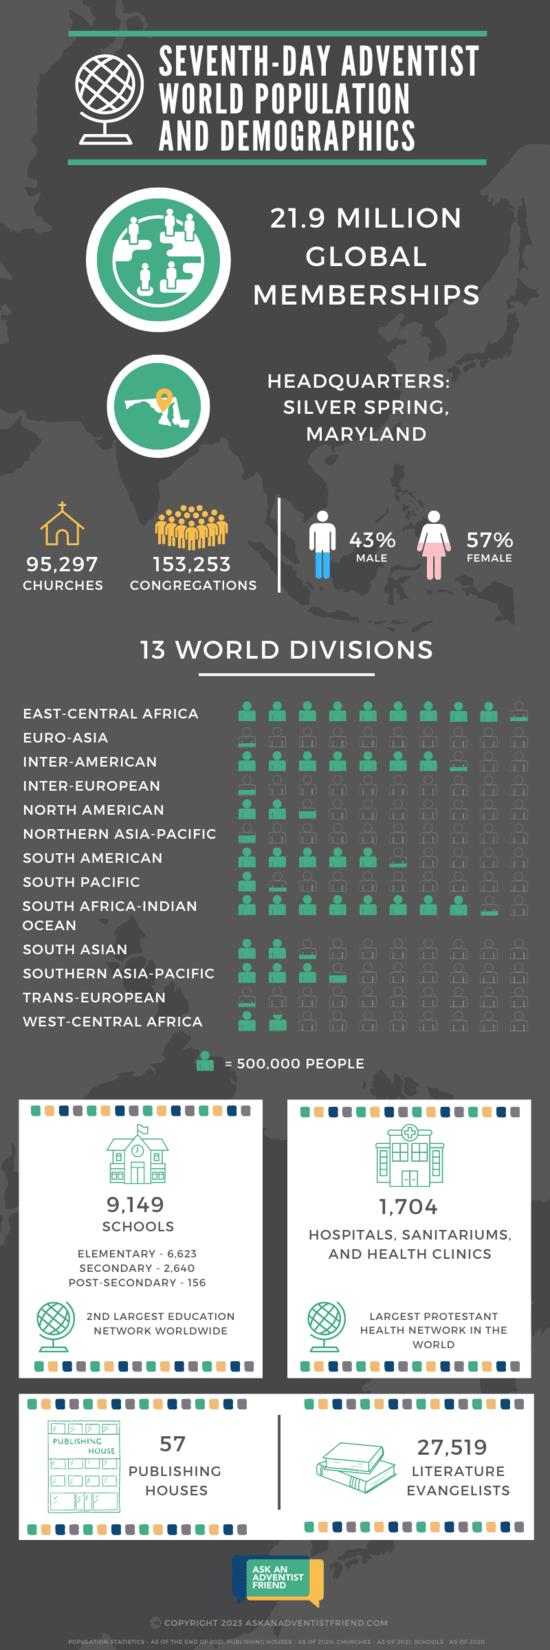 Seventh-day Adventist world population and demographics